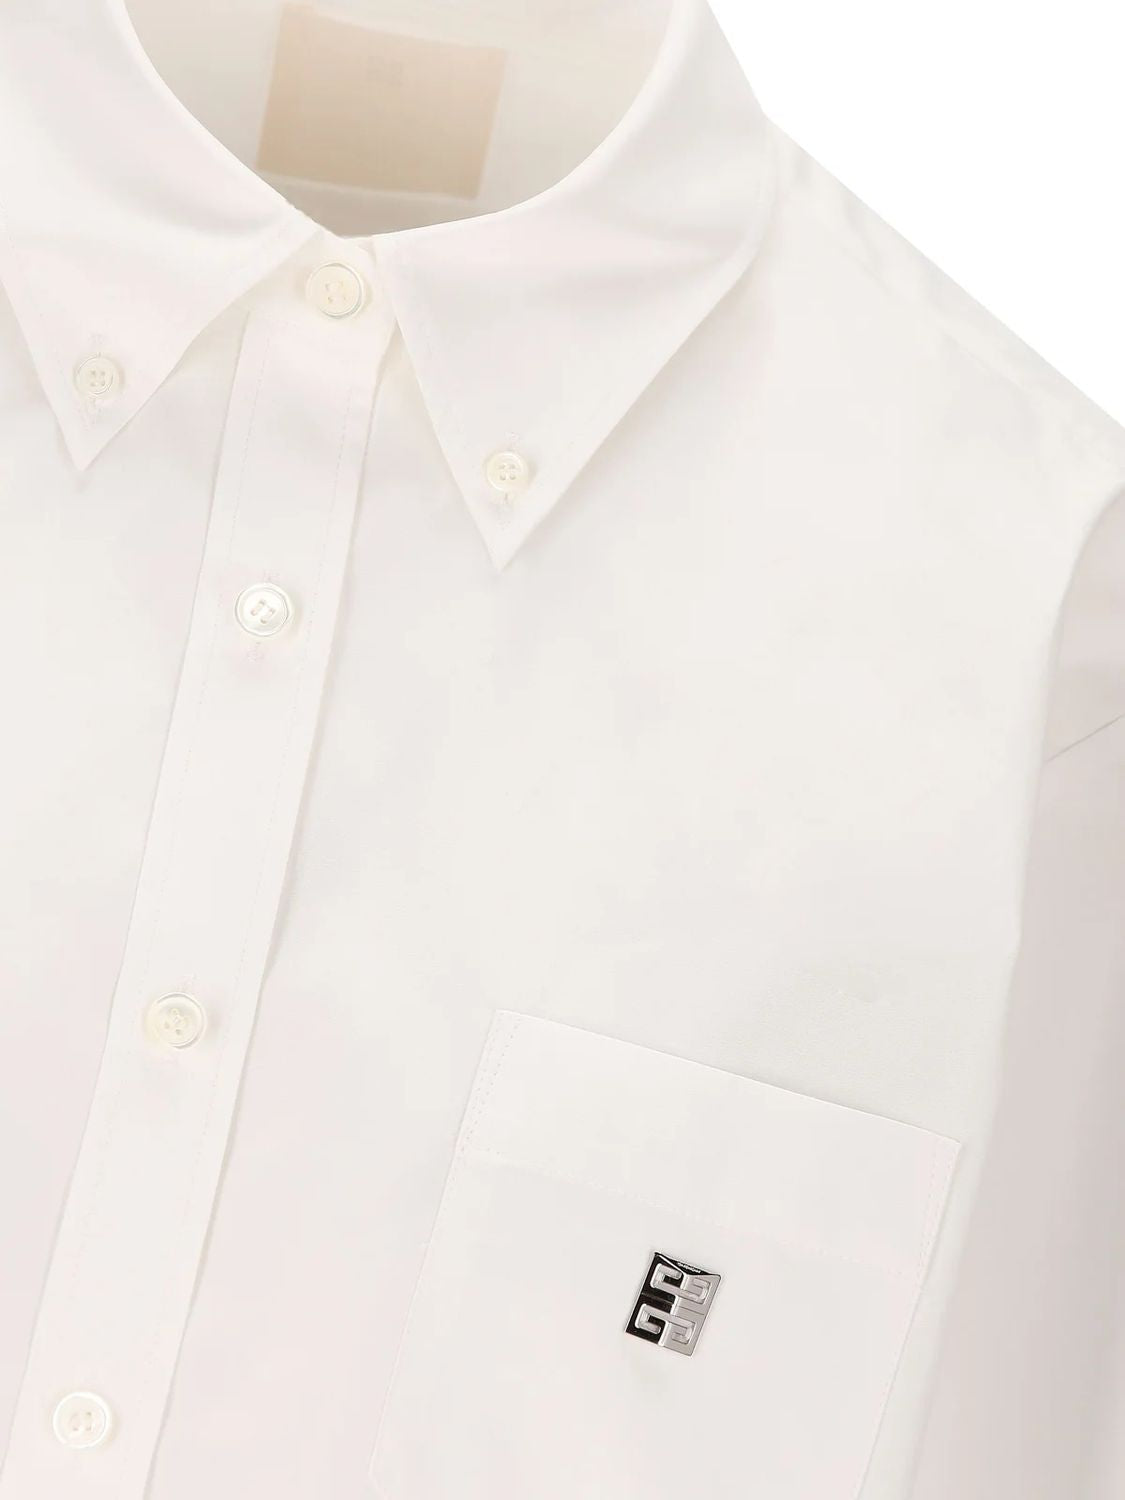 GIVENCHY White Cotton Poplin Button-Down Shirt for Women